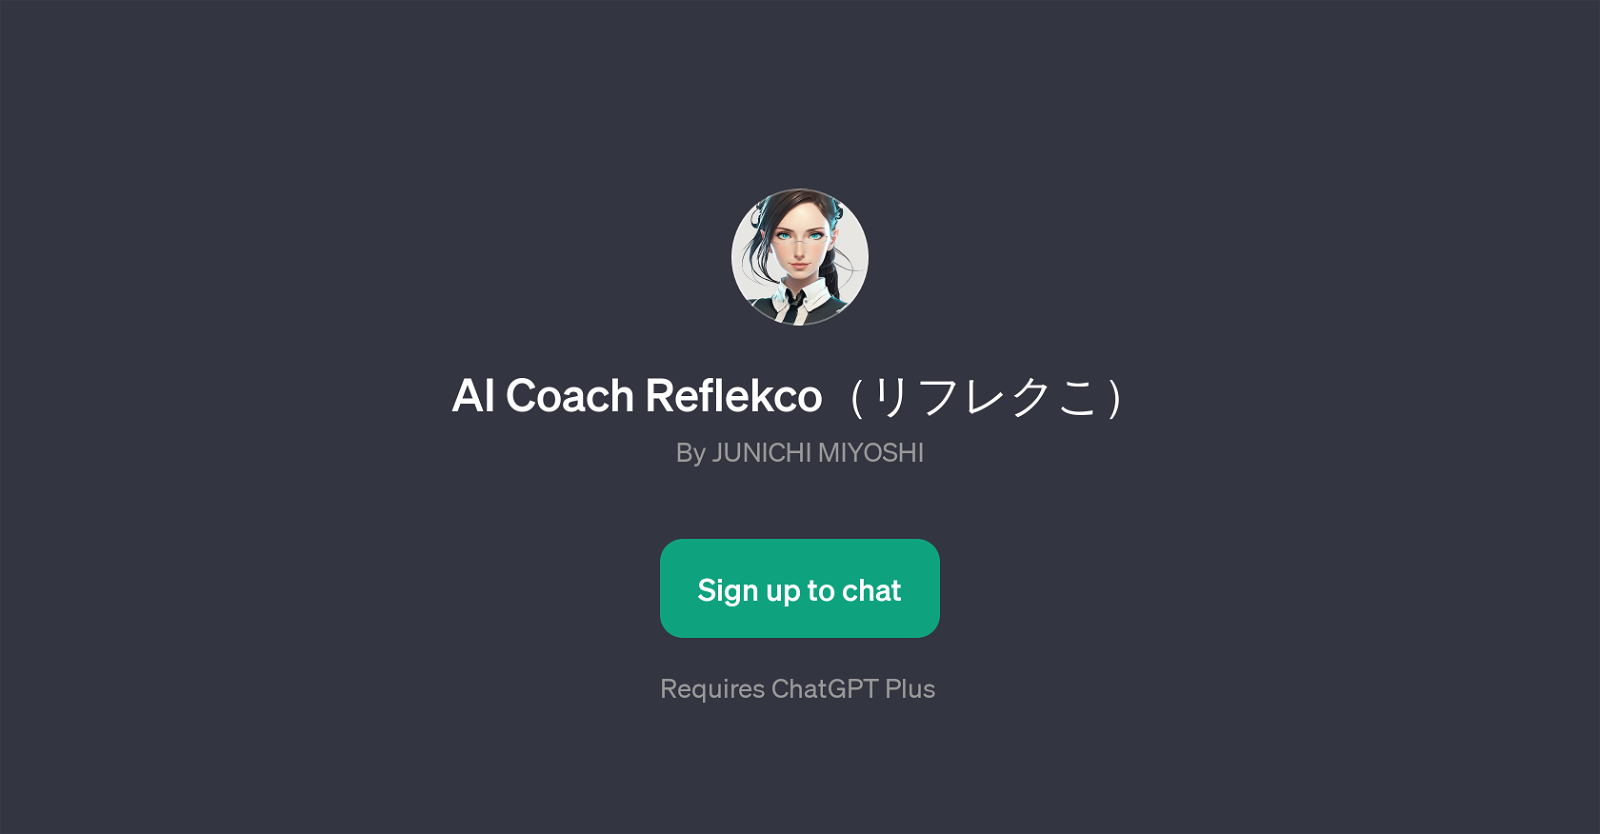 AI Coach Reflekco website